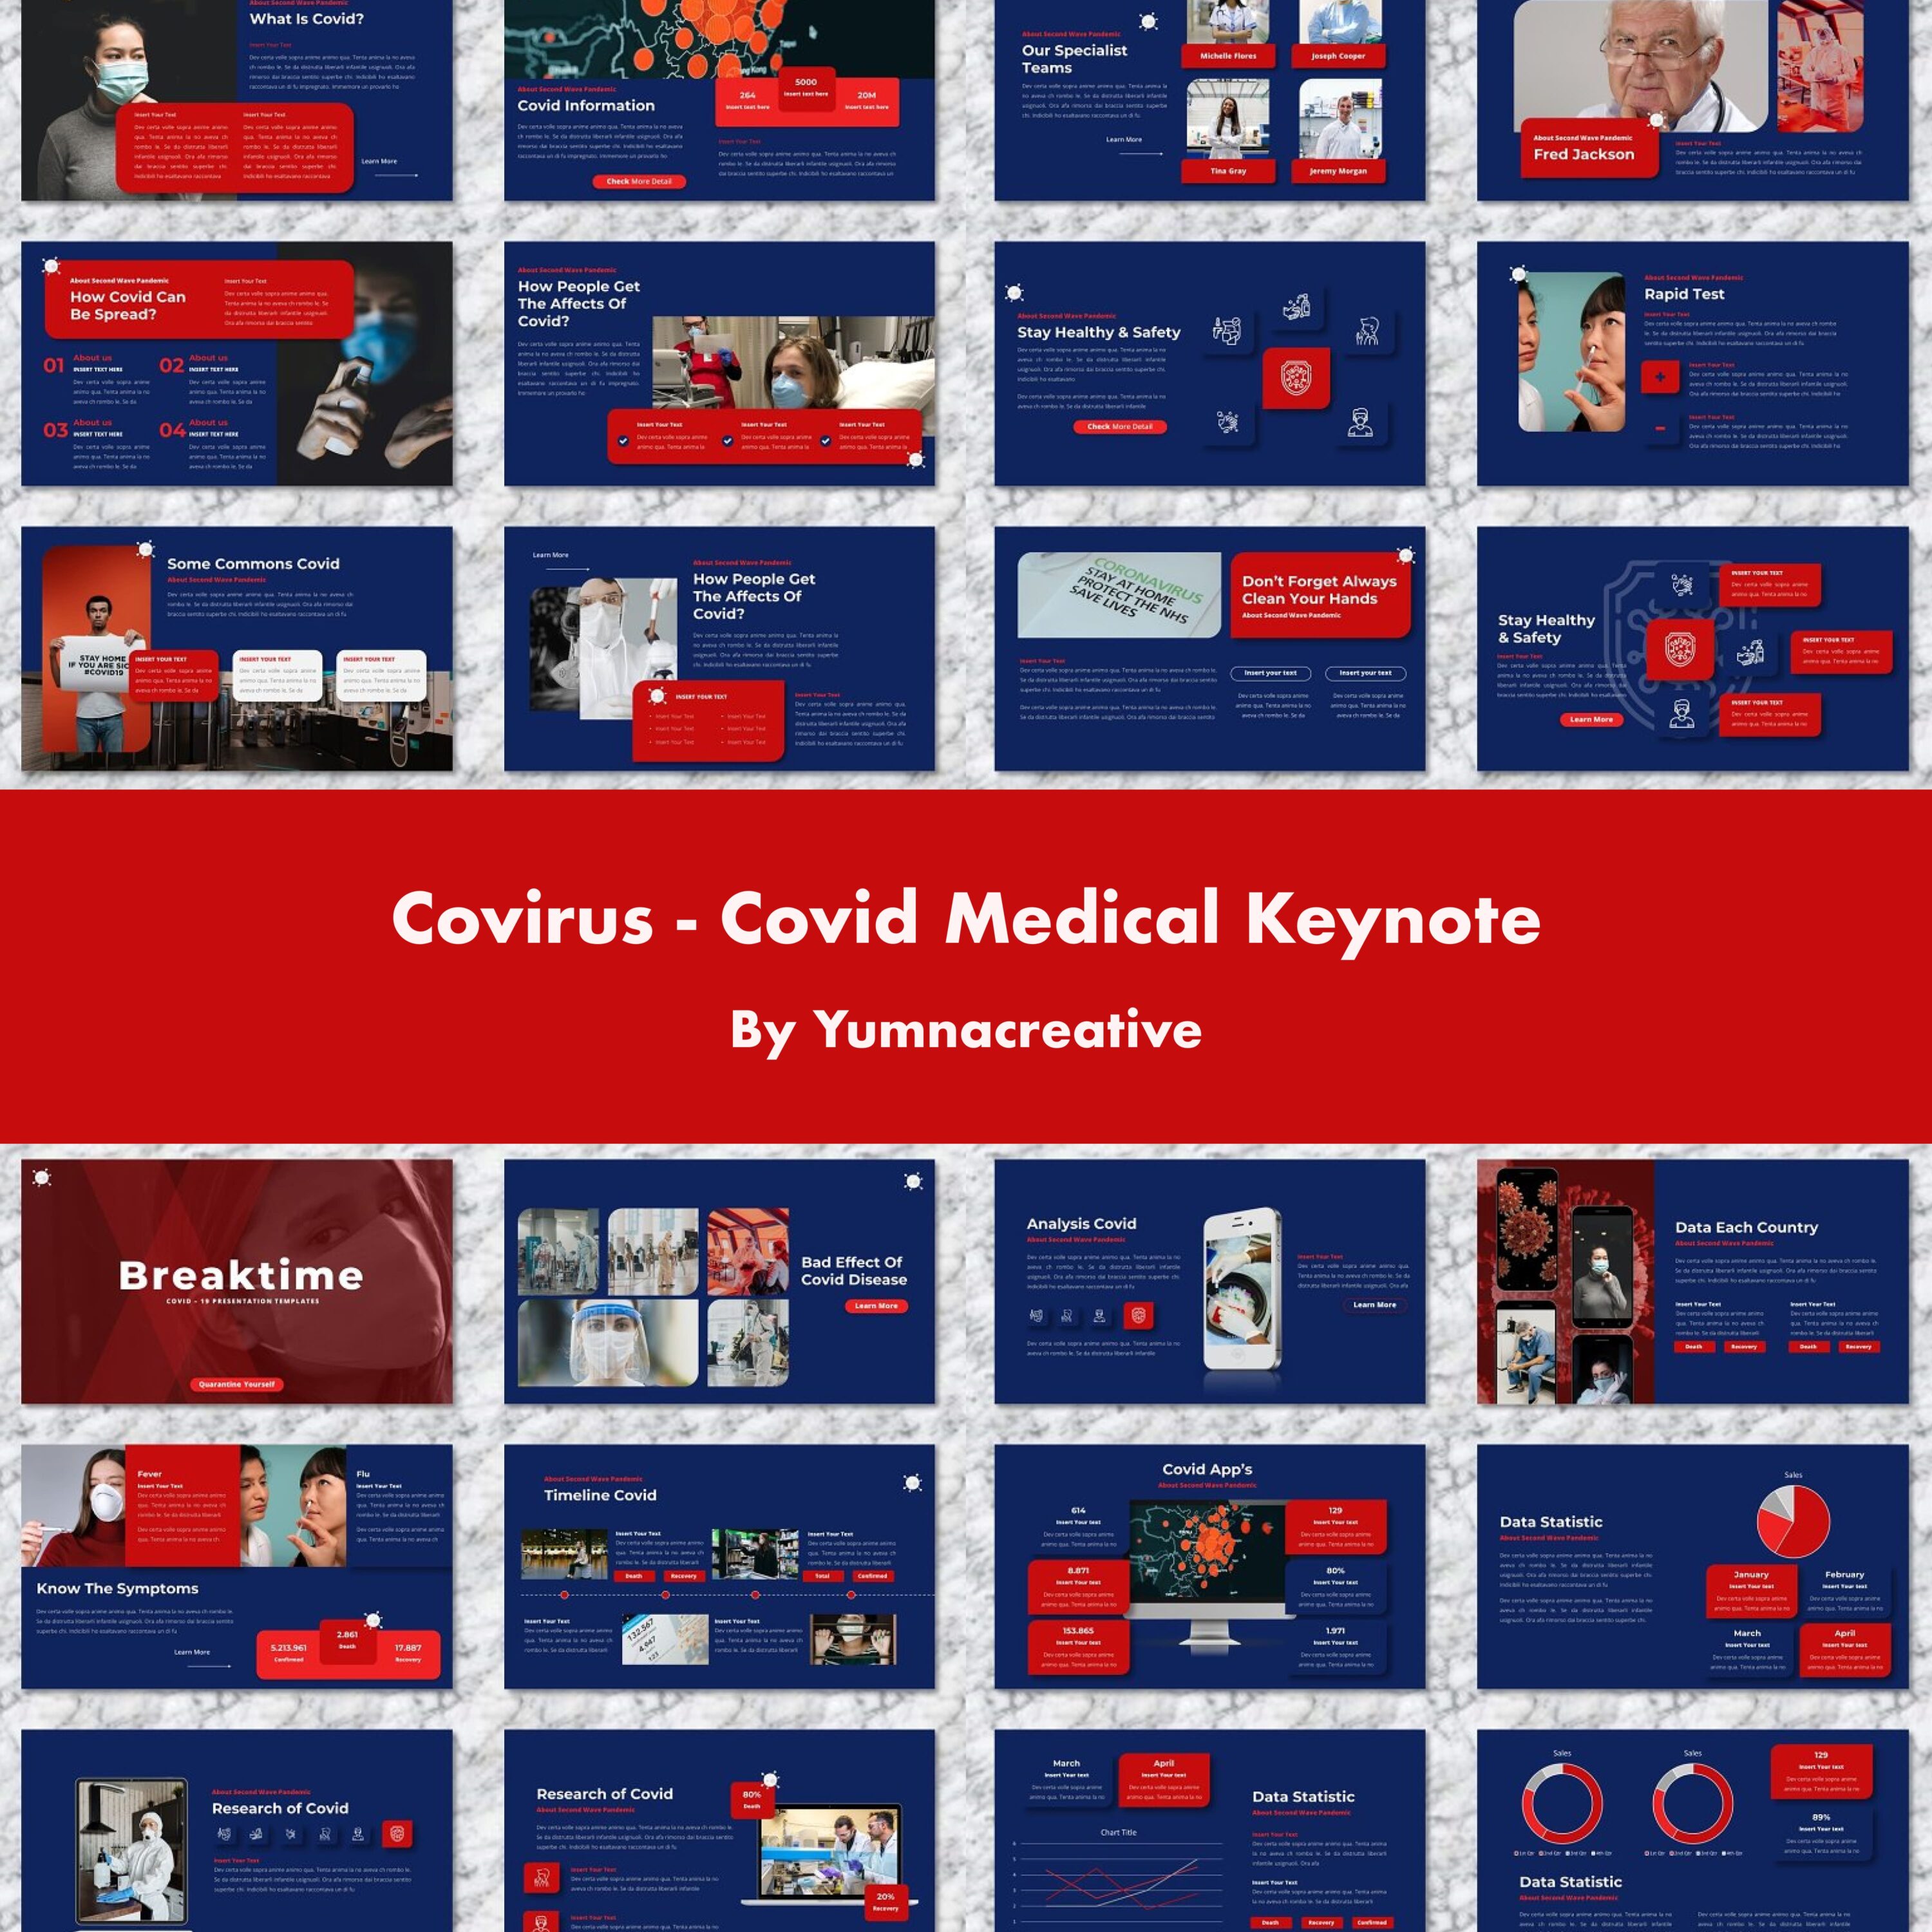 Covirus Covid Medical Keynote - main image preview.